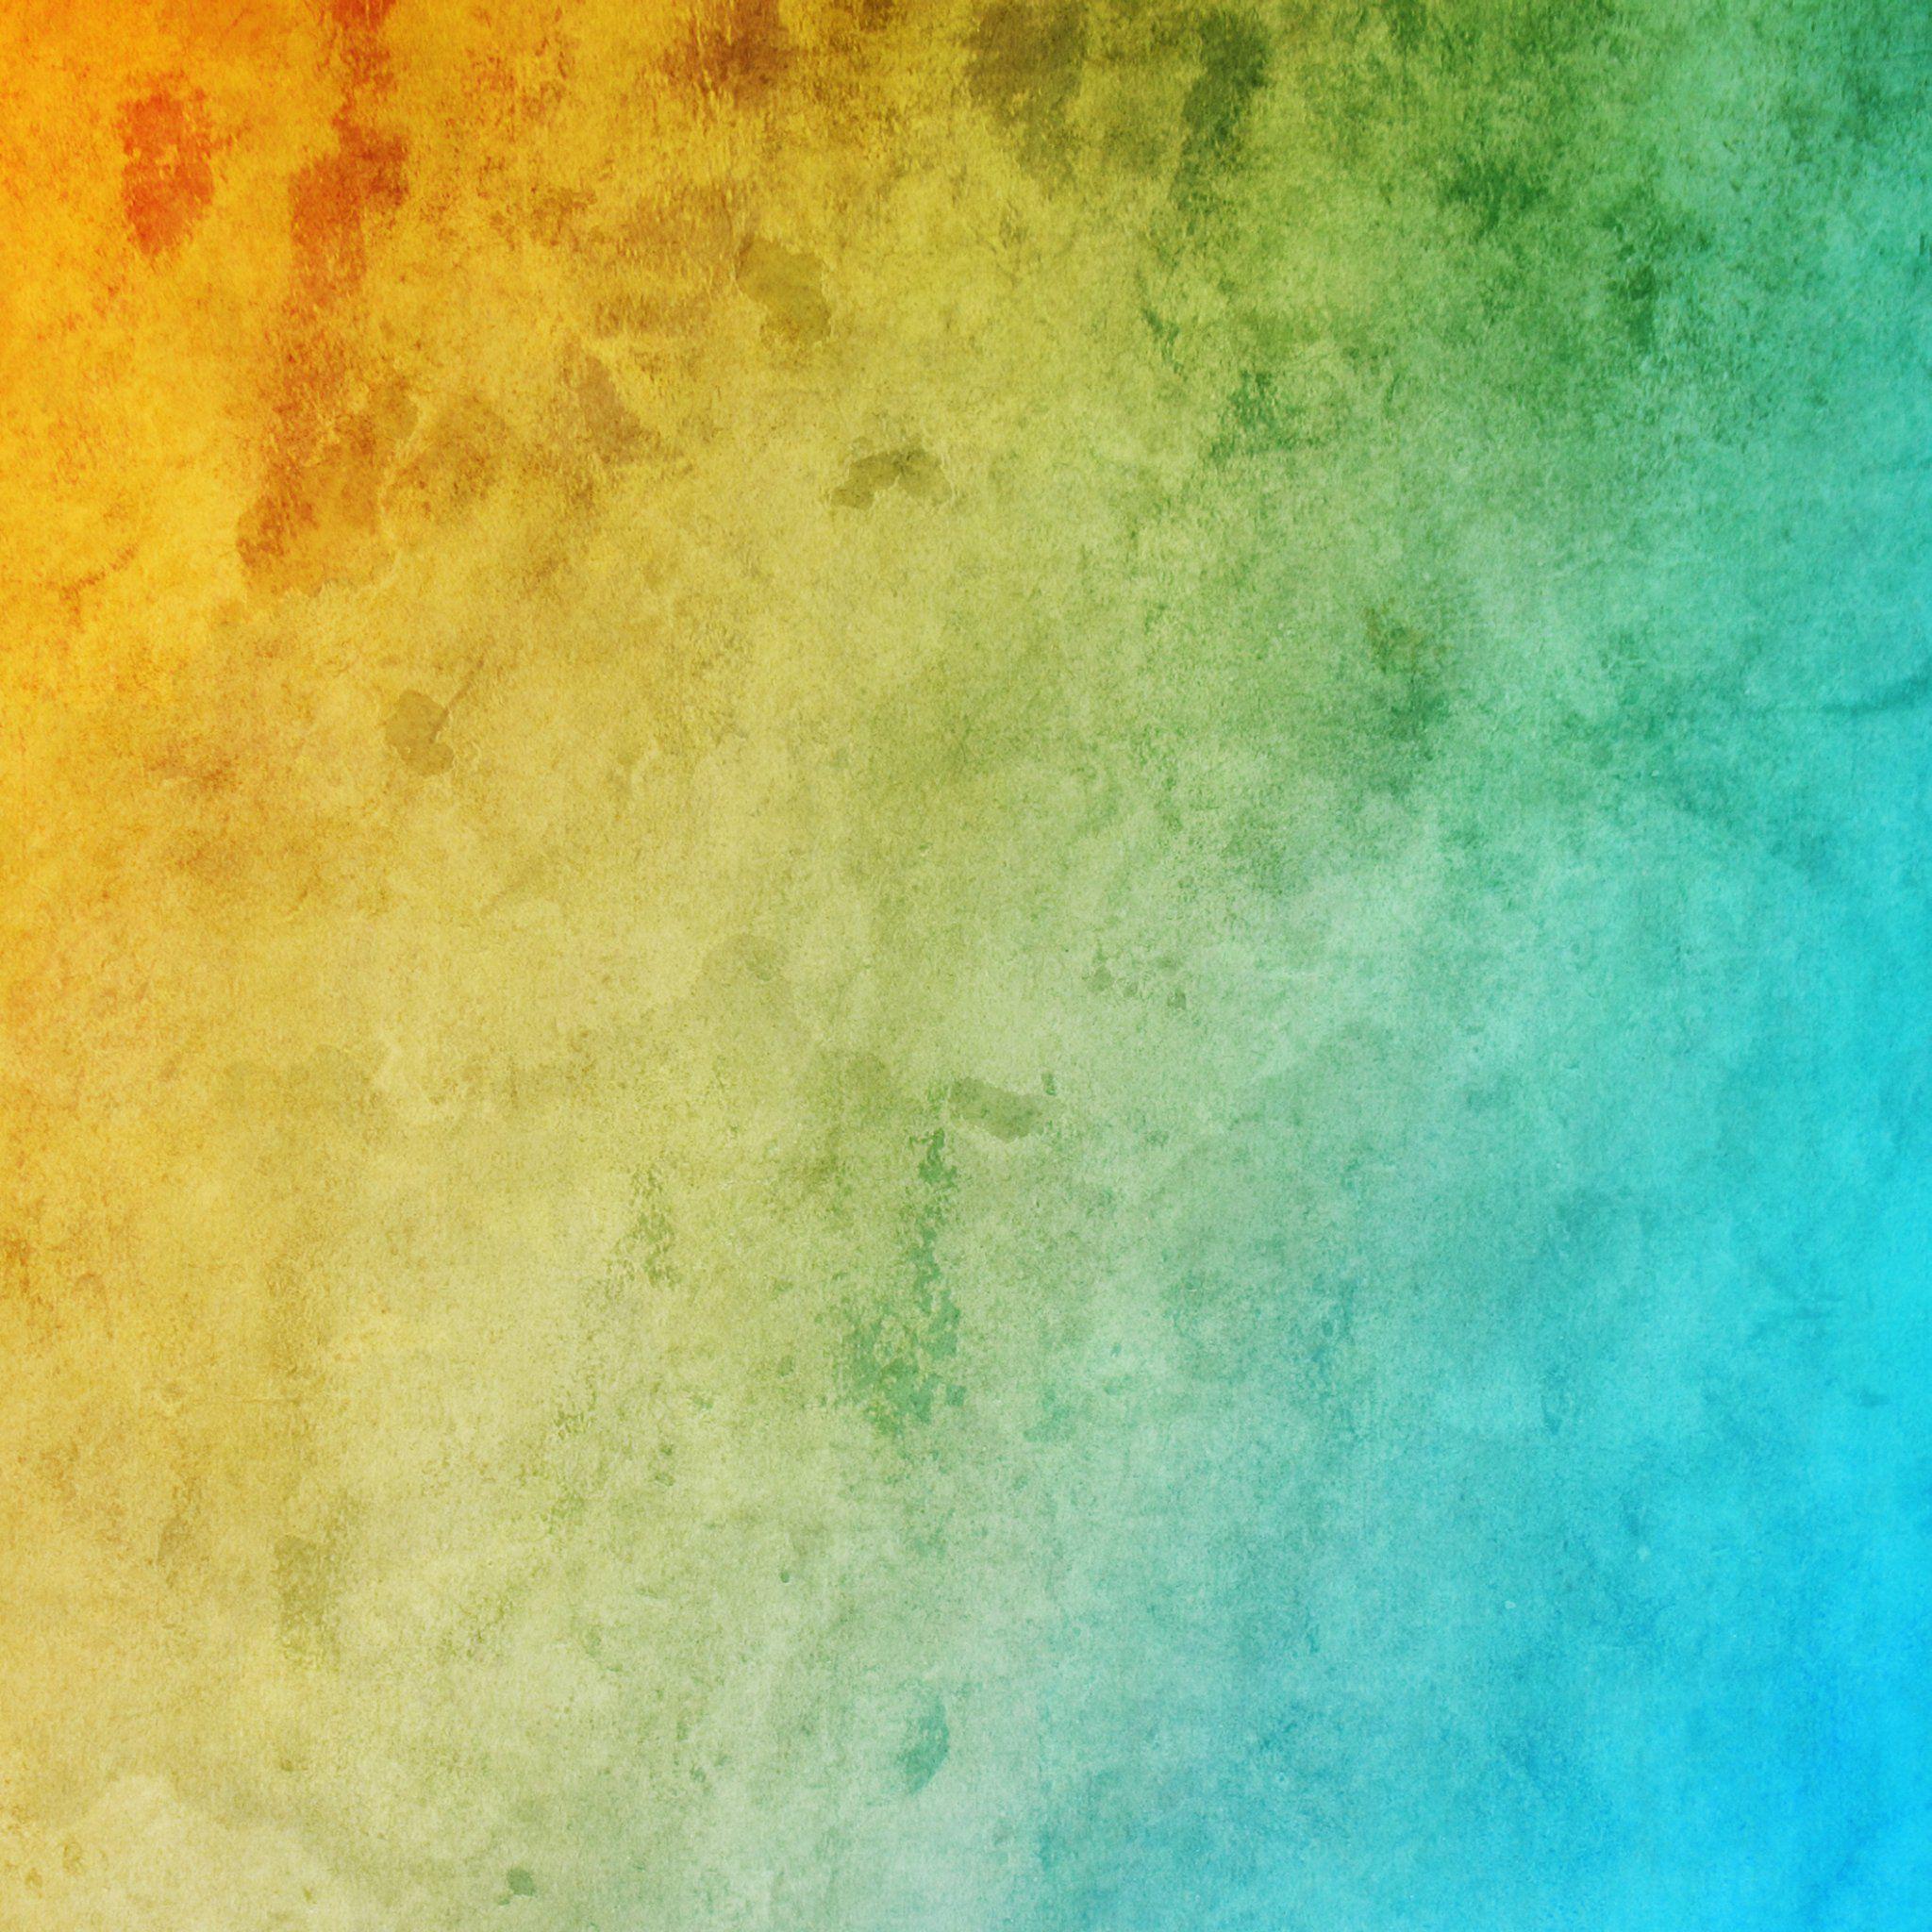 iPad 3 Wallpaper Colorful 07. iPad Air Wallpaper, iPad Air